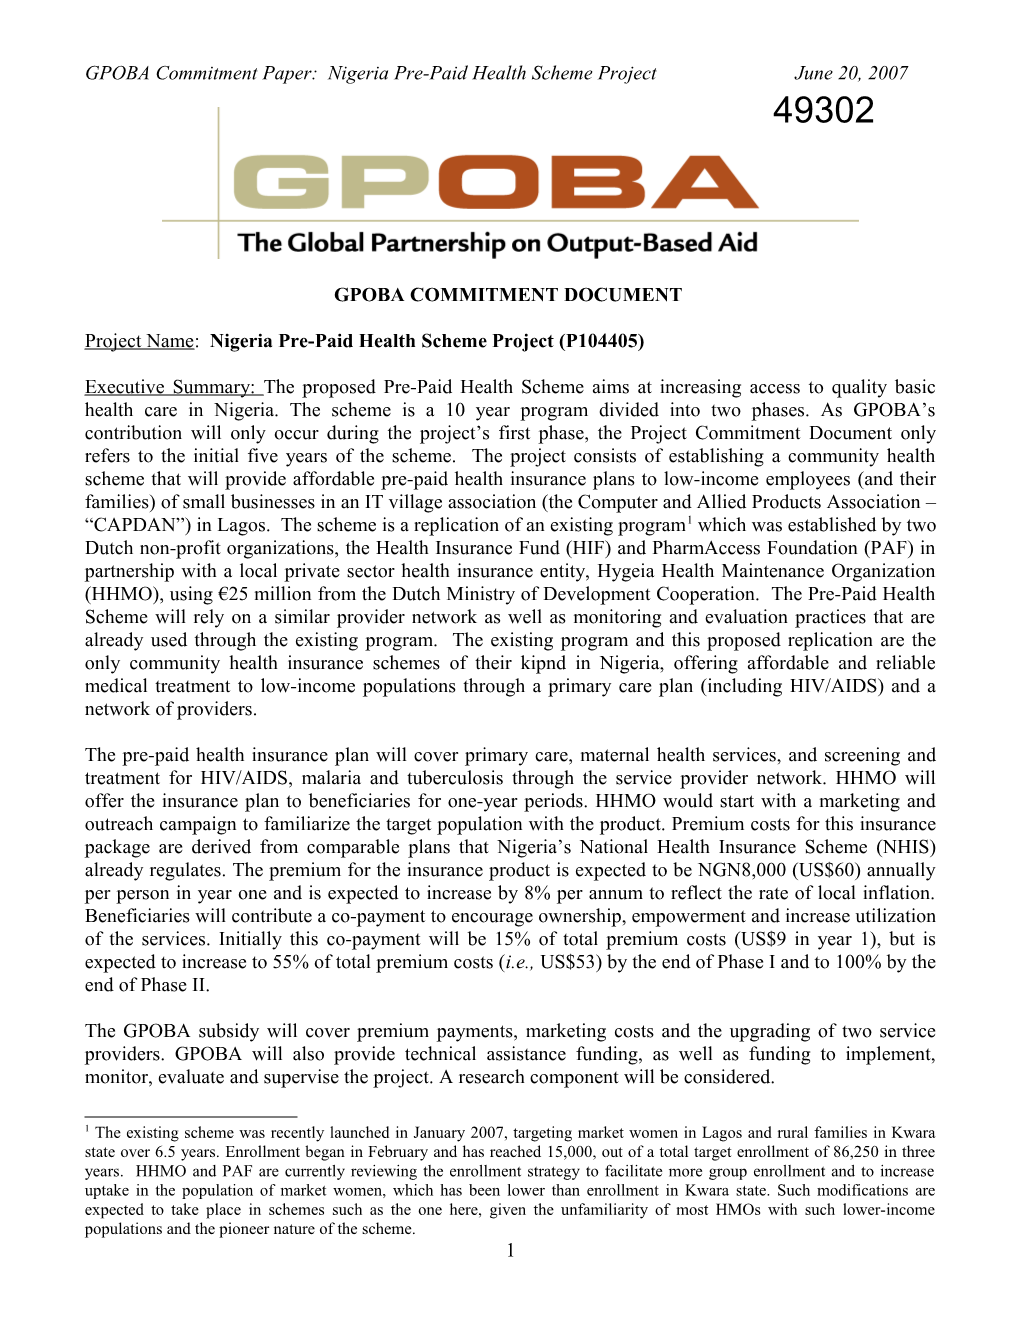 OBA for Pre-Paid Health Insurance Pilot in Nigeria